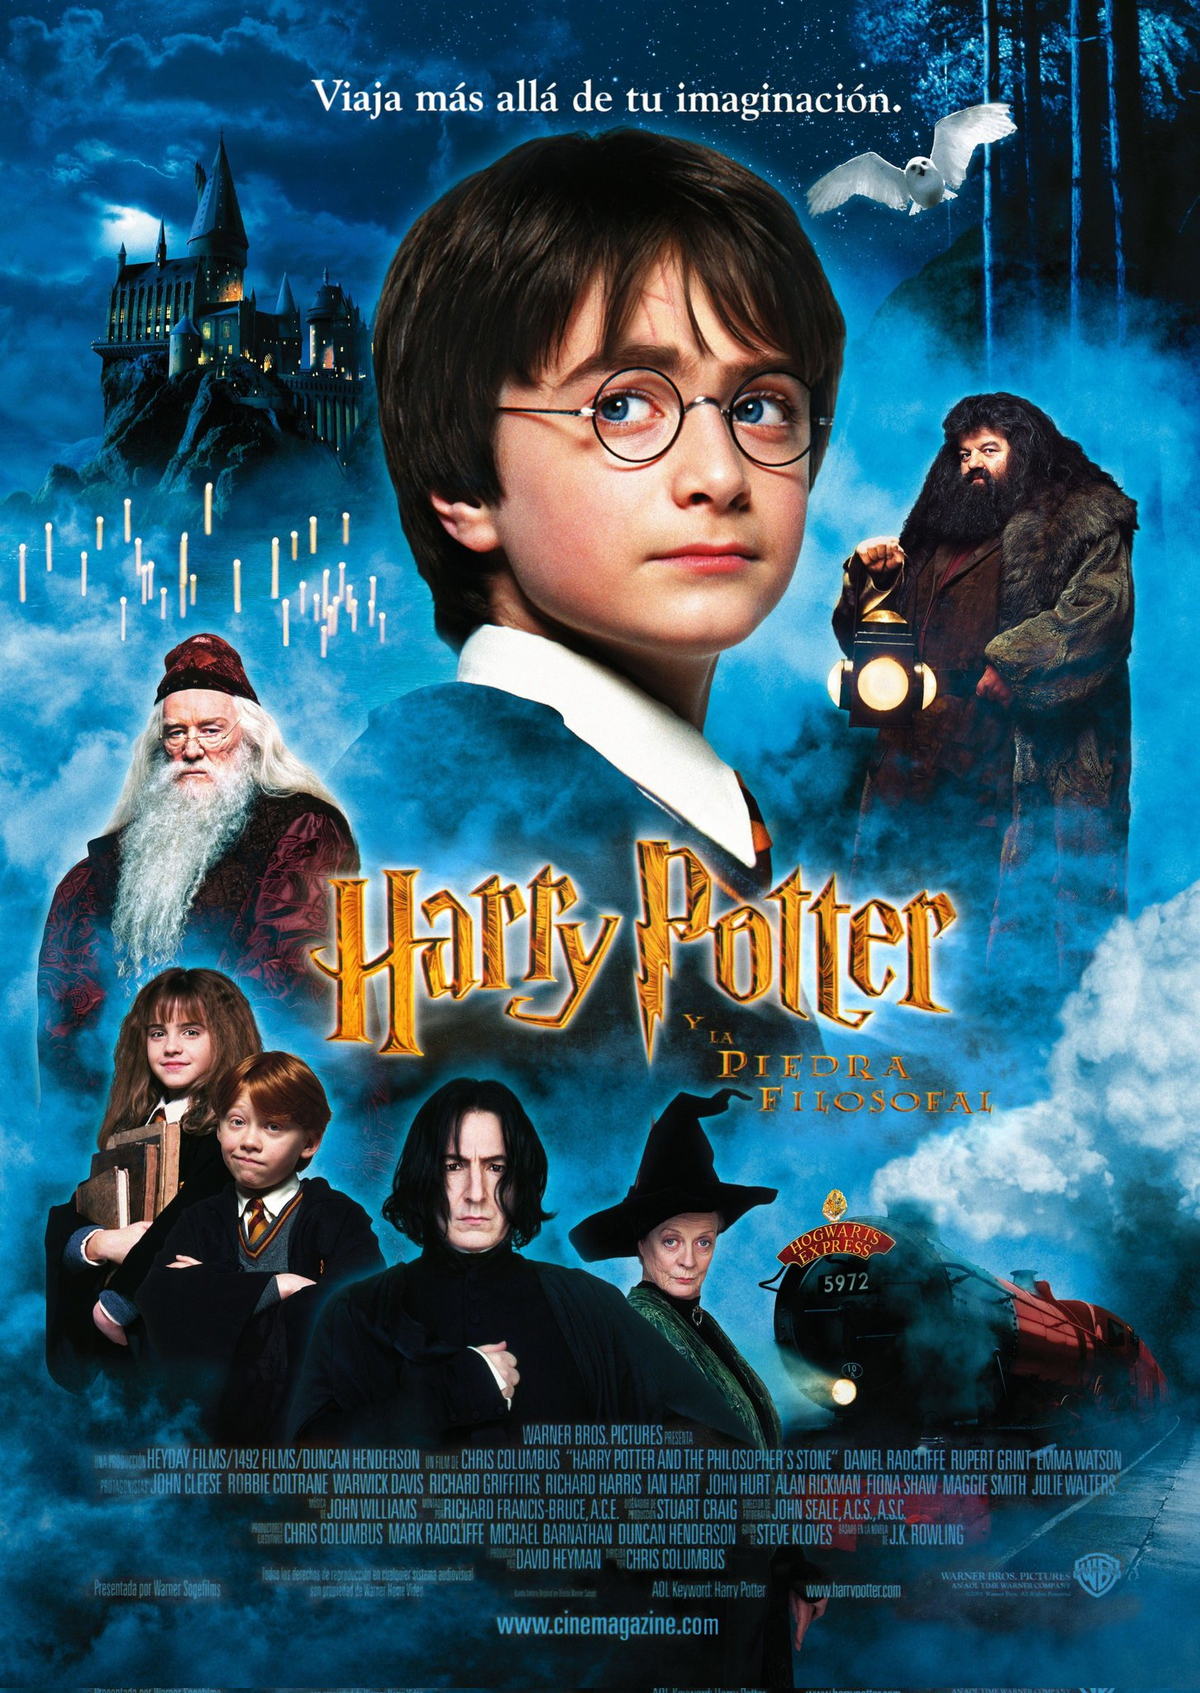 Harry Potter y la Cámara Secreta (Trailer español) 